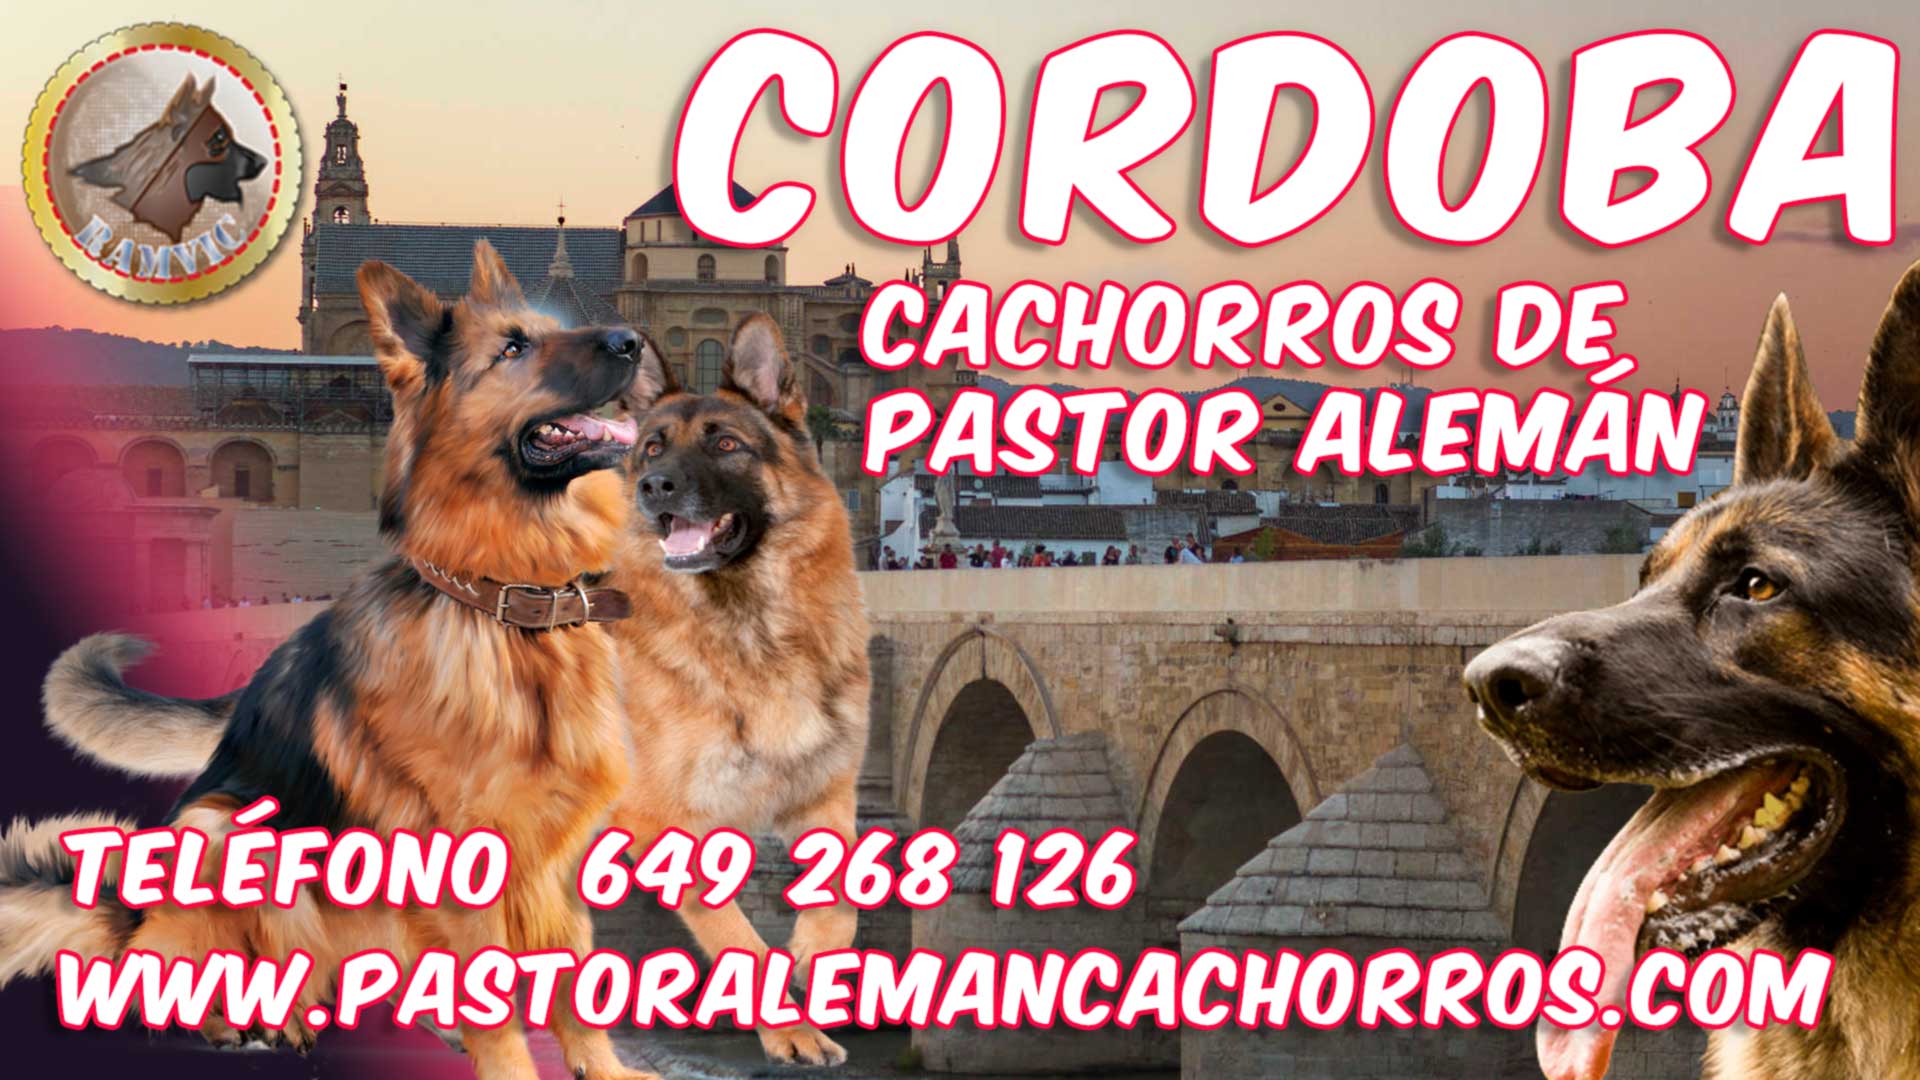 Comprar cachorros de pastor alemán en Córdoba